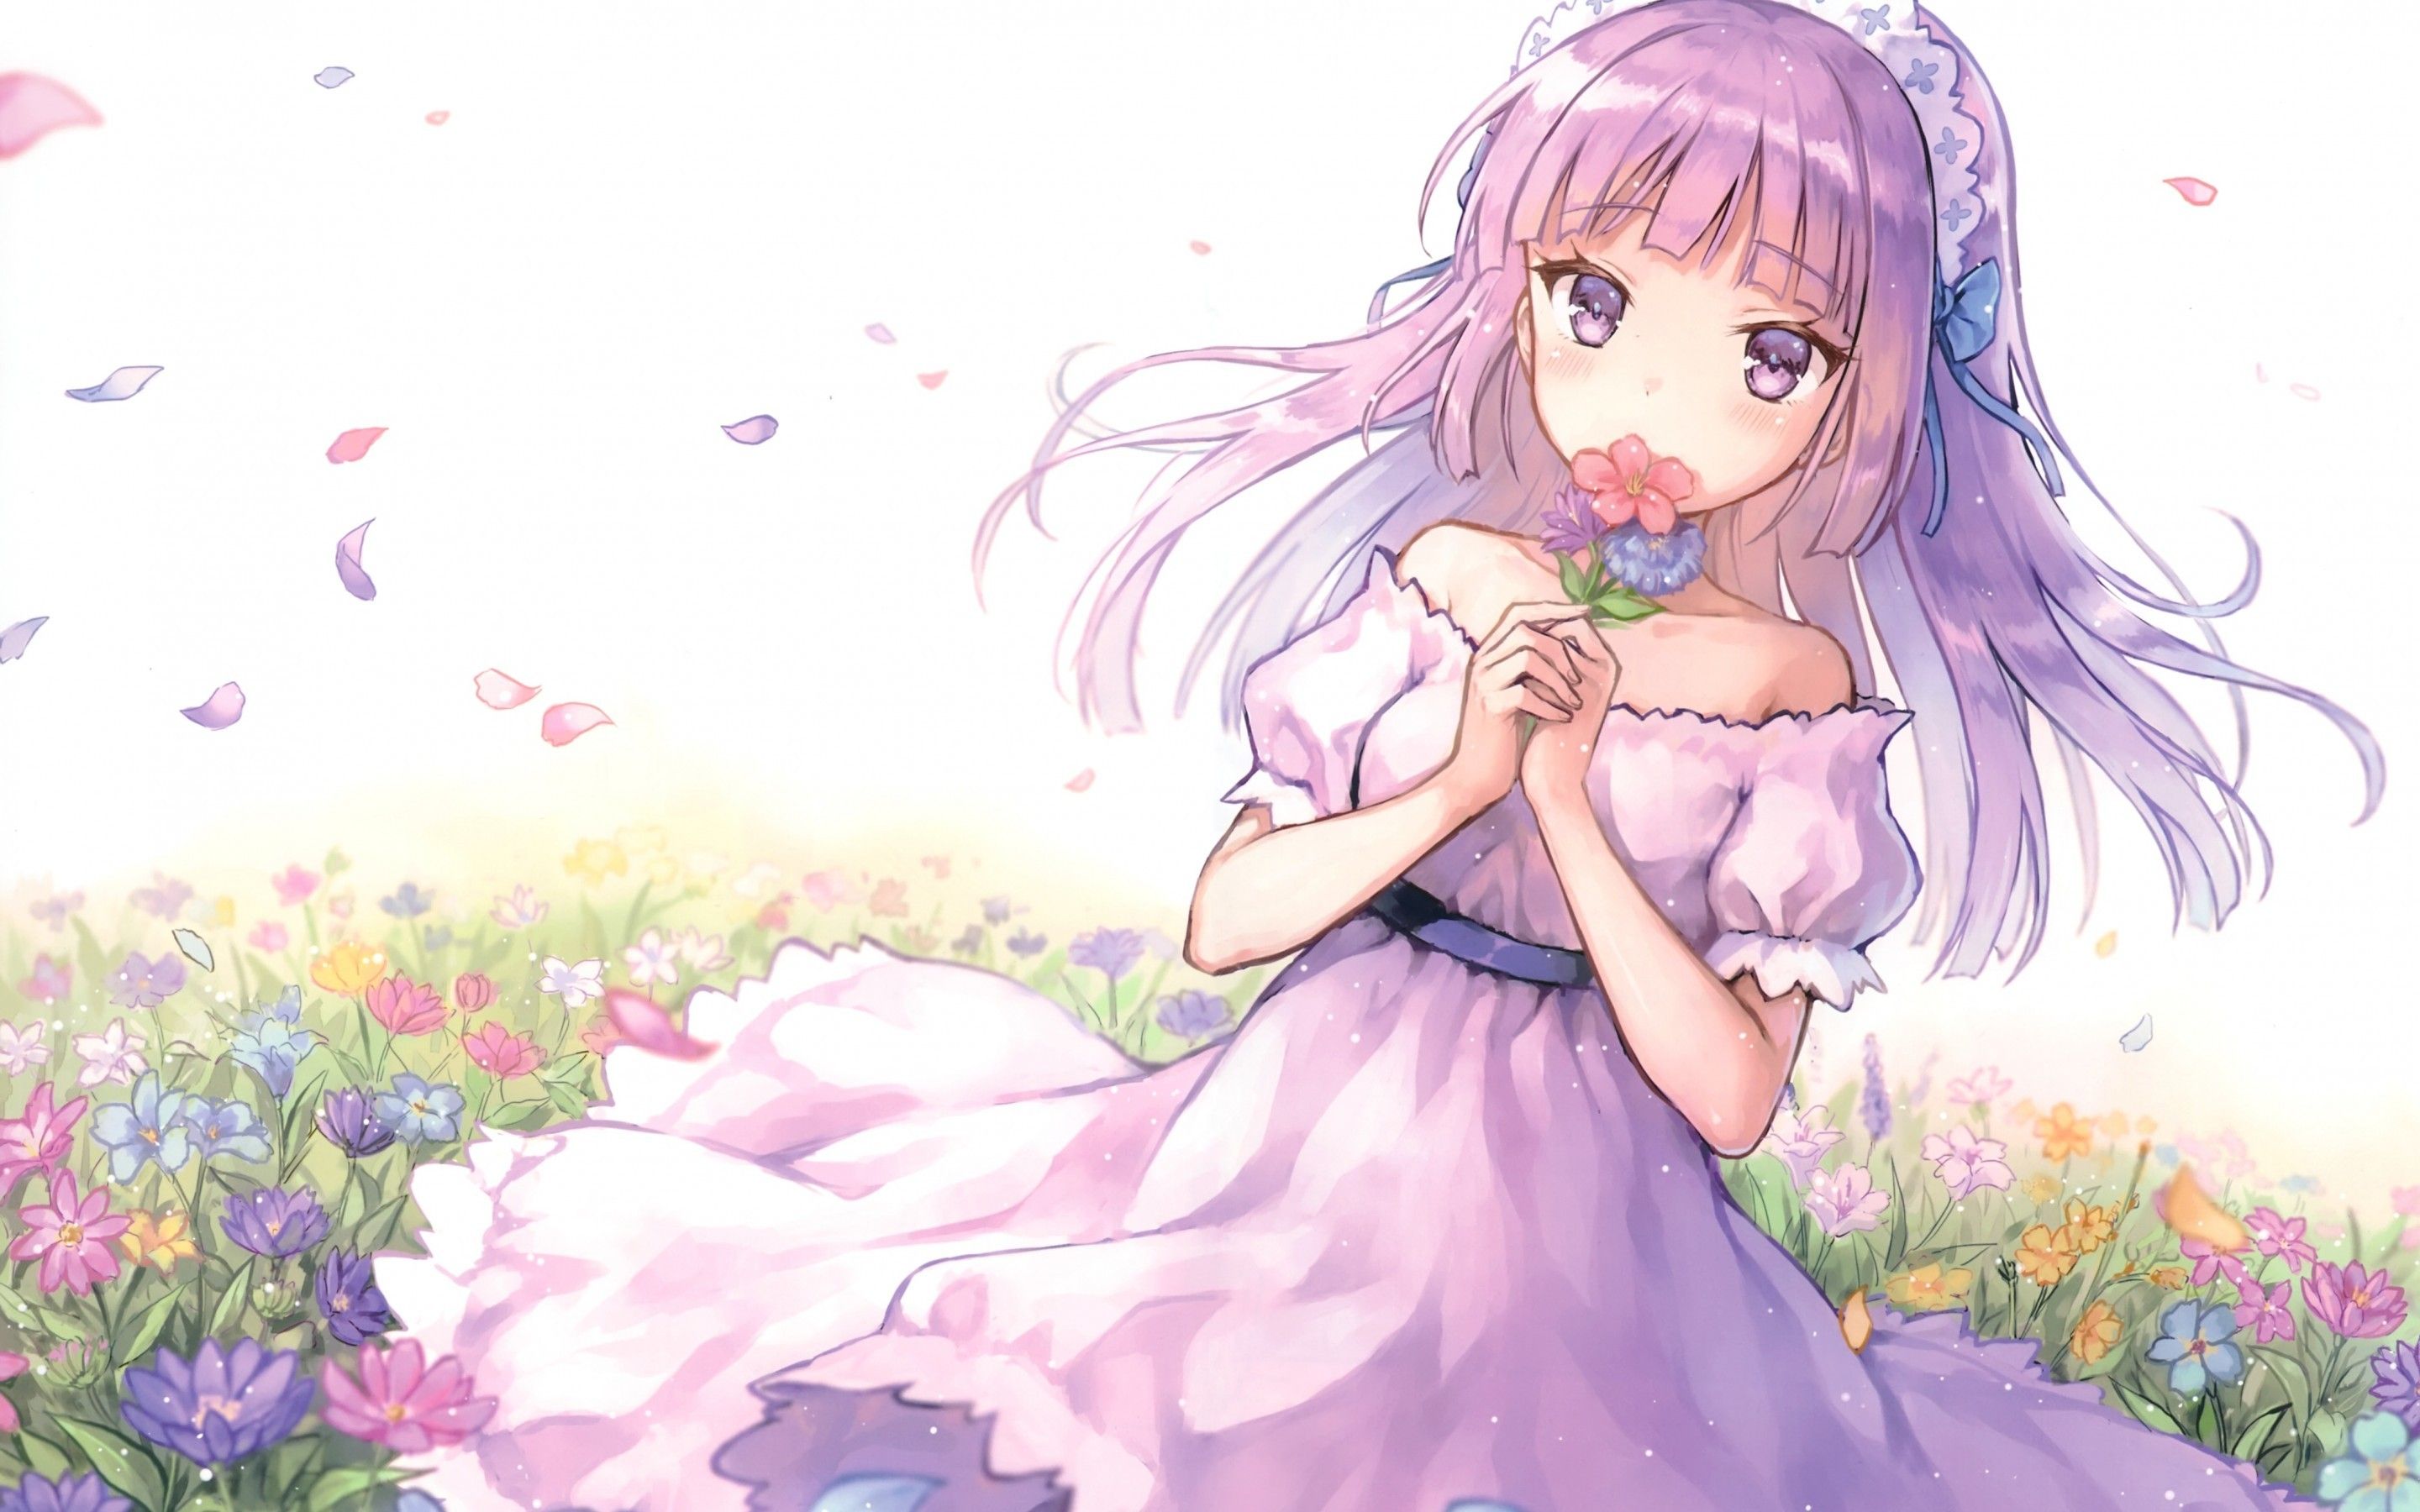 Download 2880x1800 Anime Girl, Headband, Dress, Flowers, Petals, Ribbon Wallpaper for MacBook Pro 15 inch